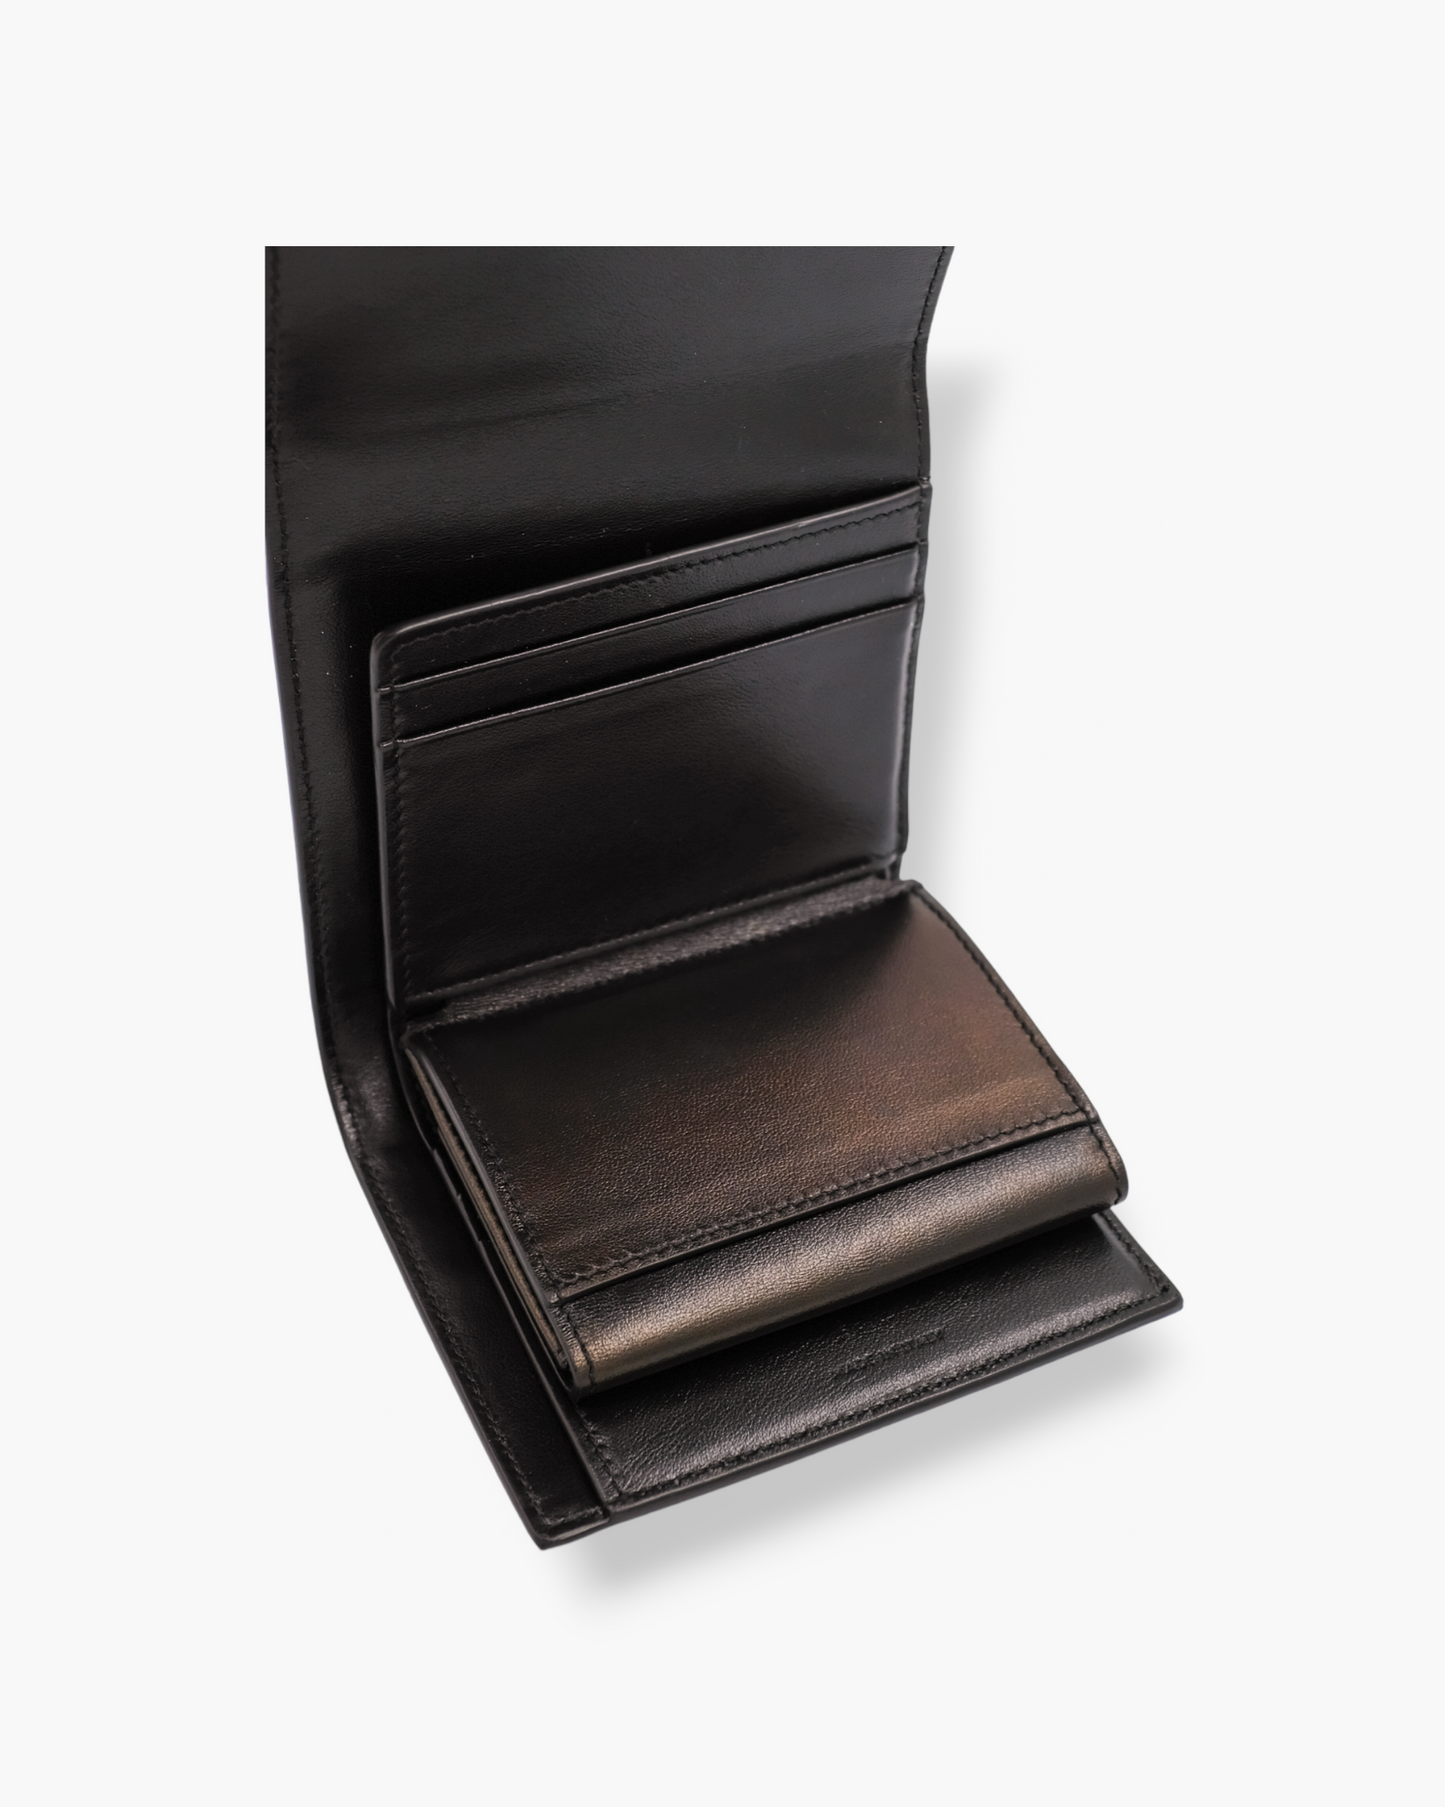 Celine Black Leather Small Trifold Wallet Celine